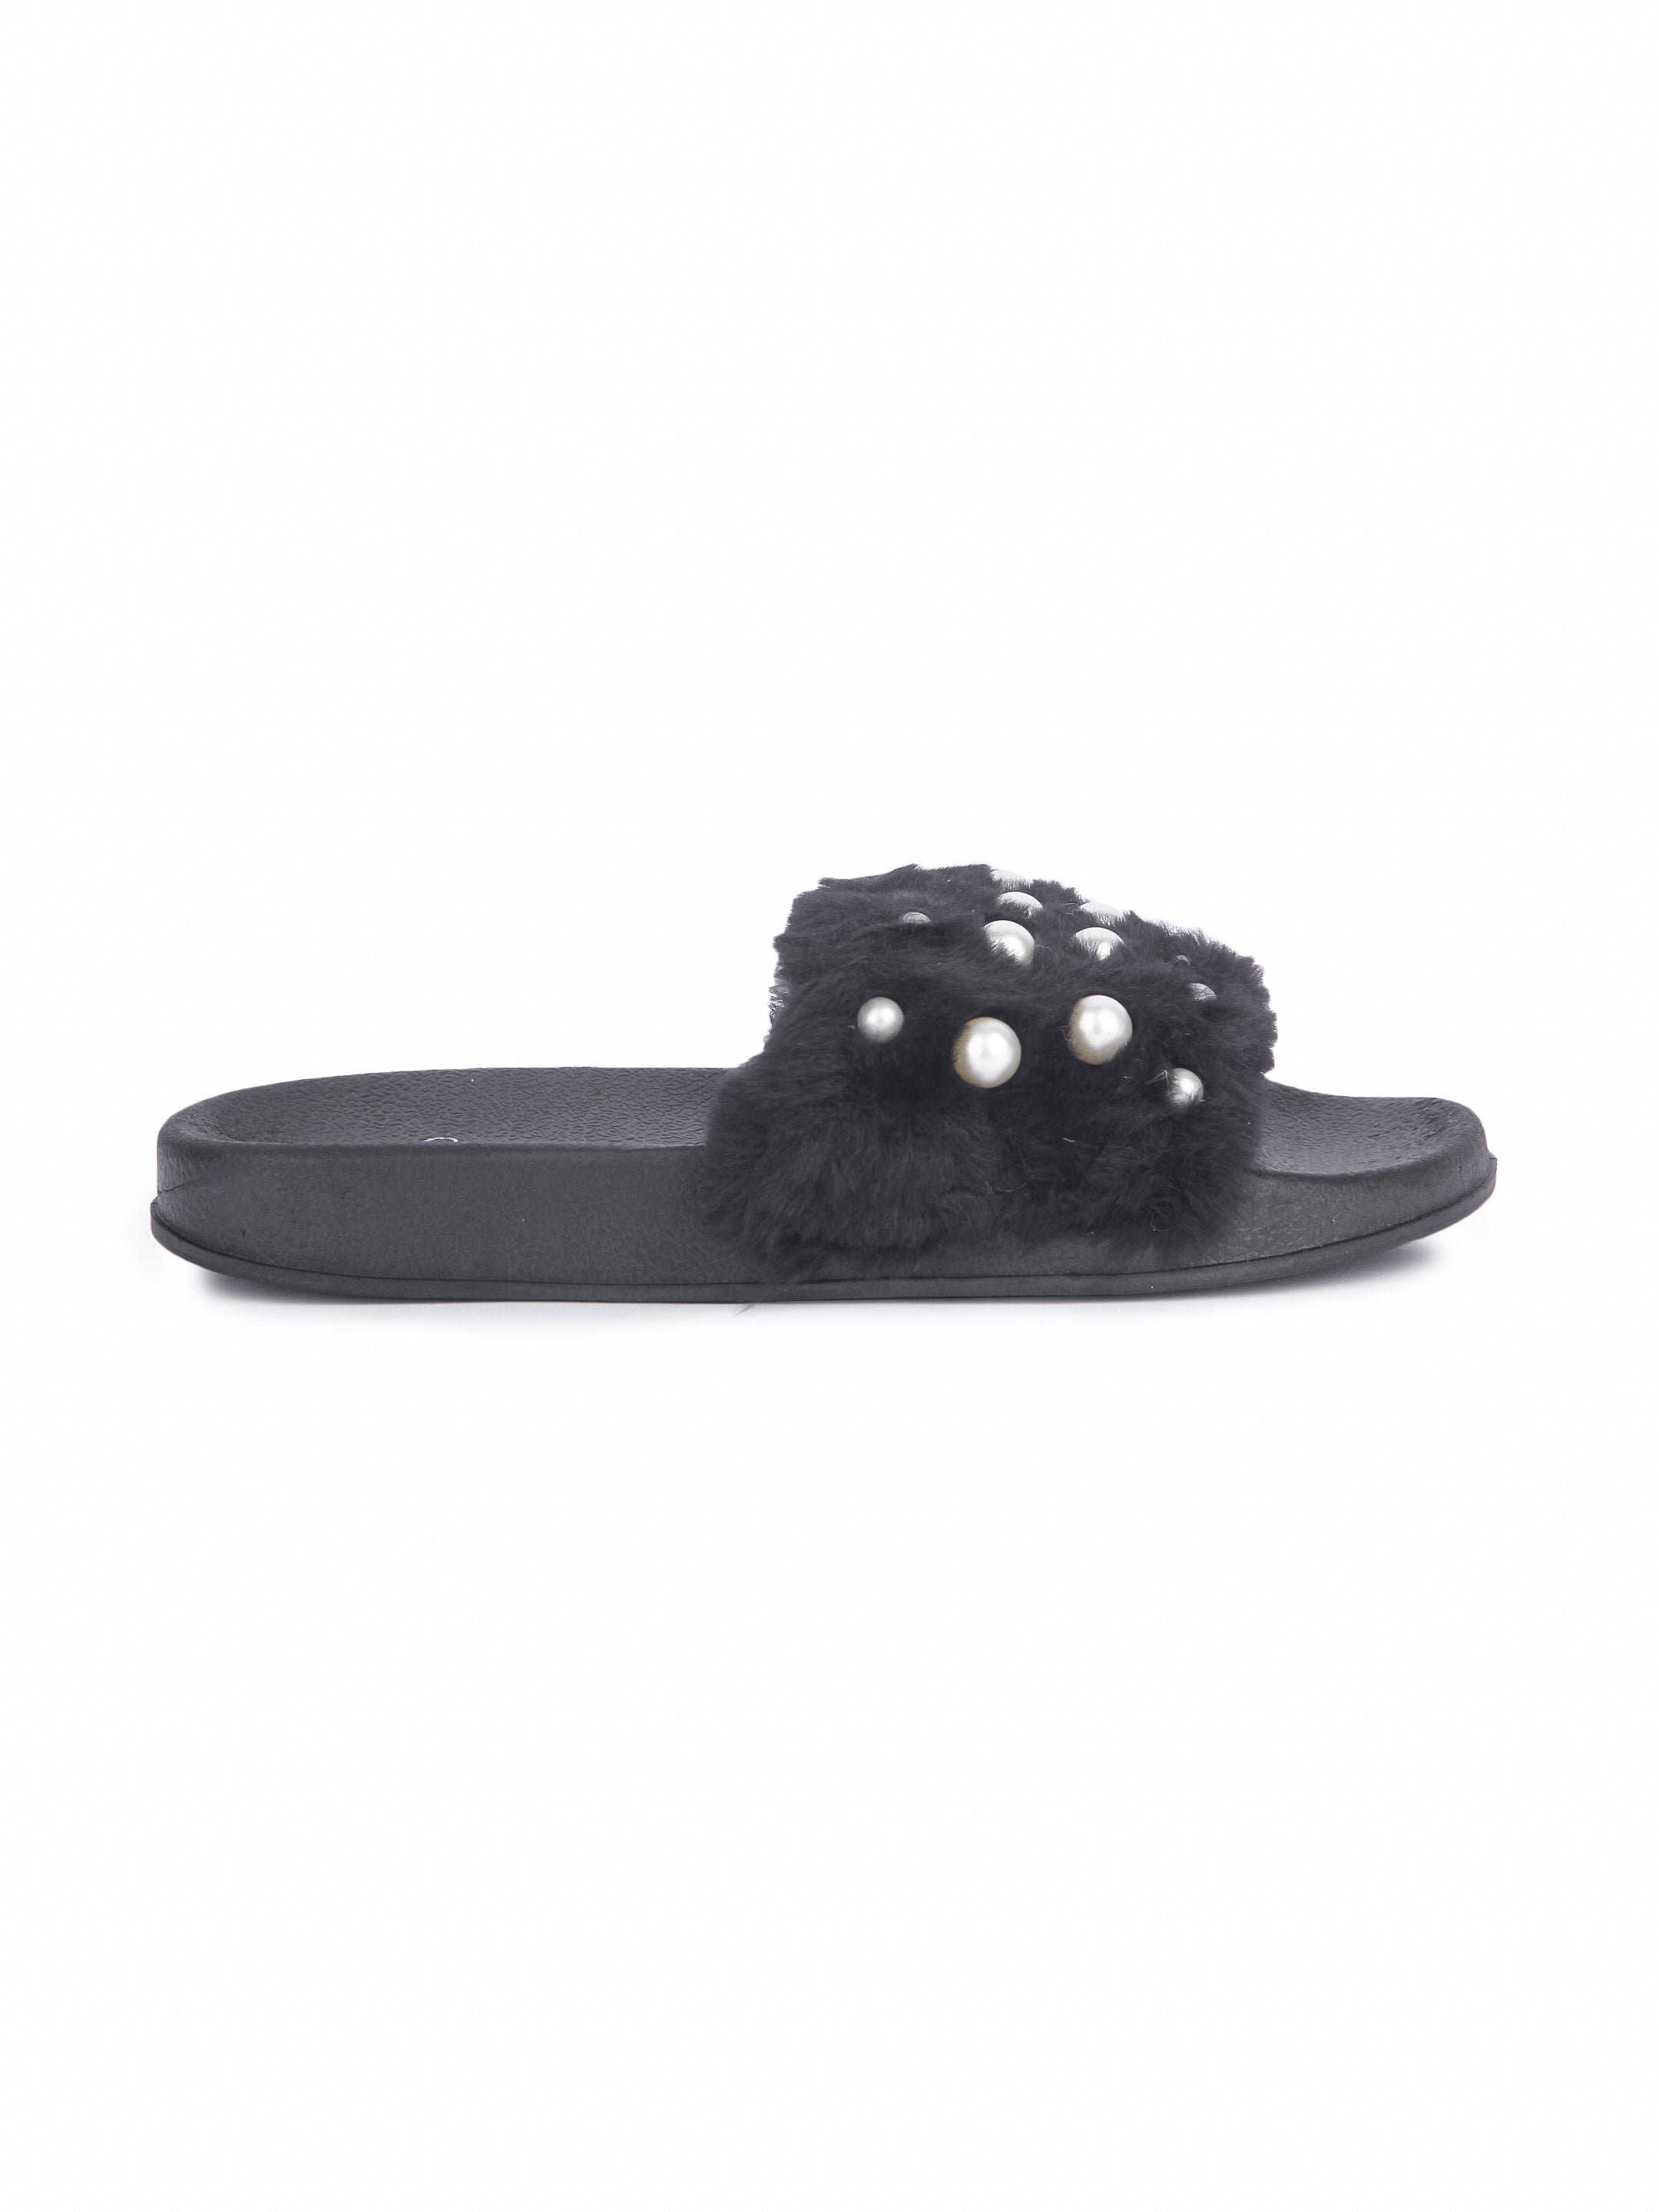 Weeboo Jewel of the Sea Faux Pearl Buckle Slide Sandals Various Sizes | Slide  sandals, Jewel of the seas, Faux pearl